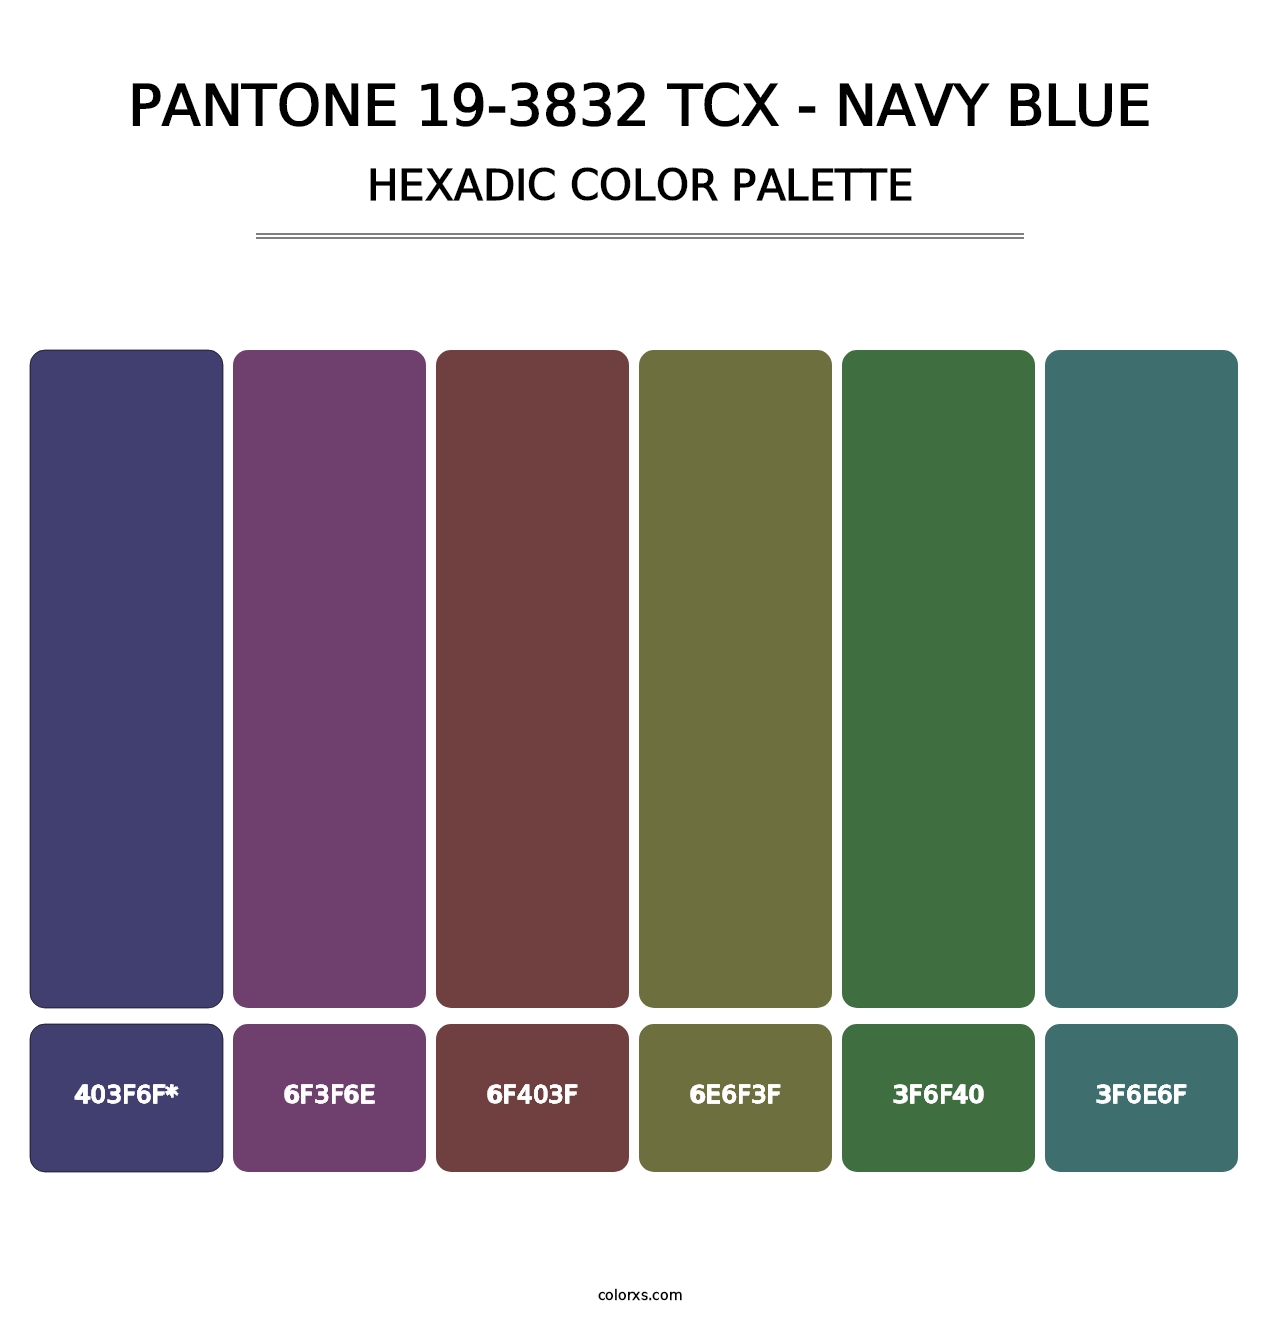 PANTONE 19-3832 TCX - Navy Blue - Hexadic Color Palette